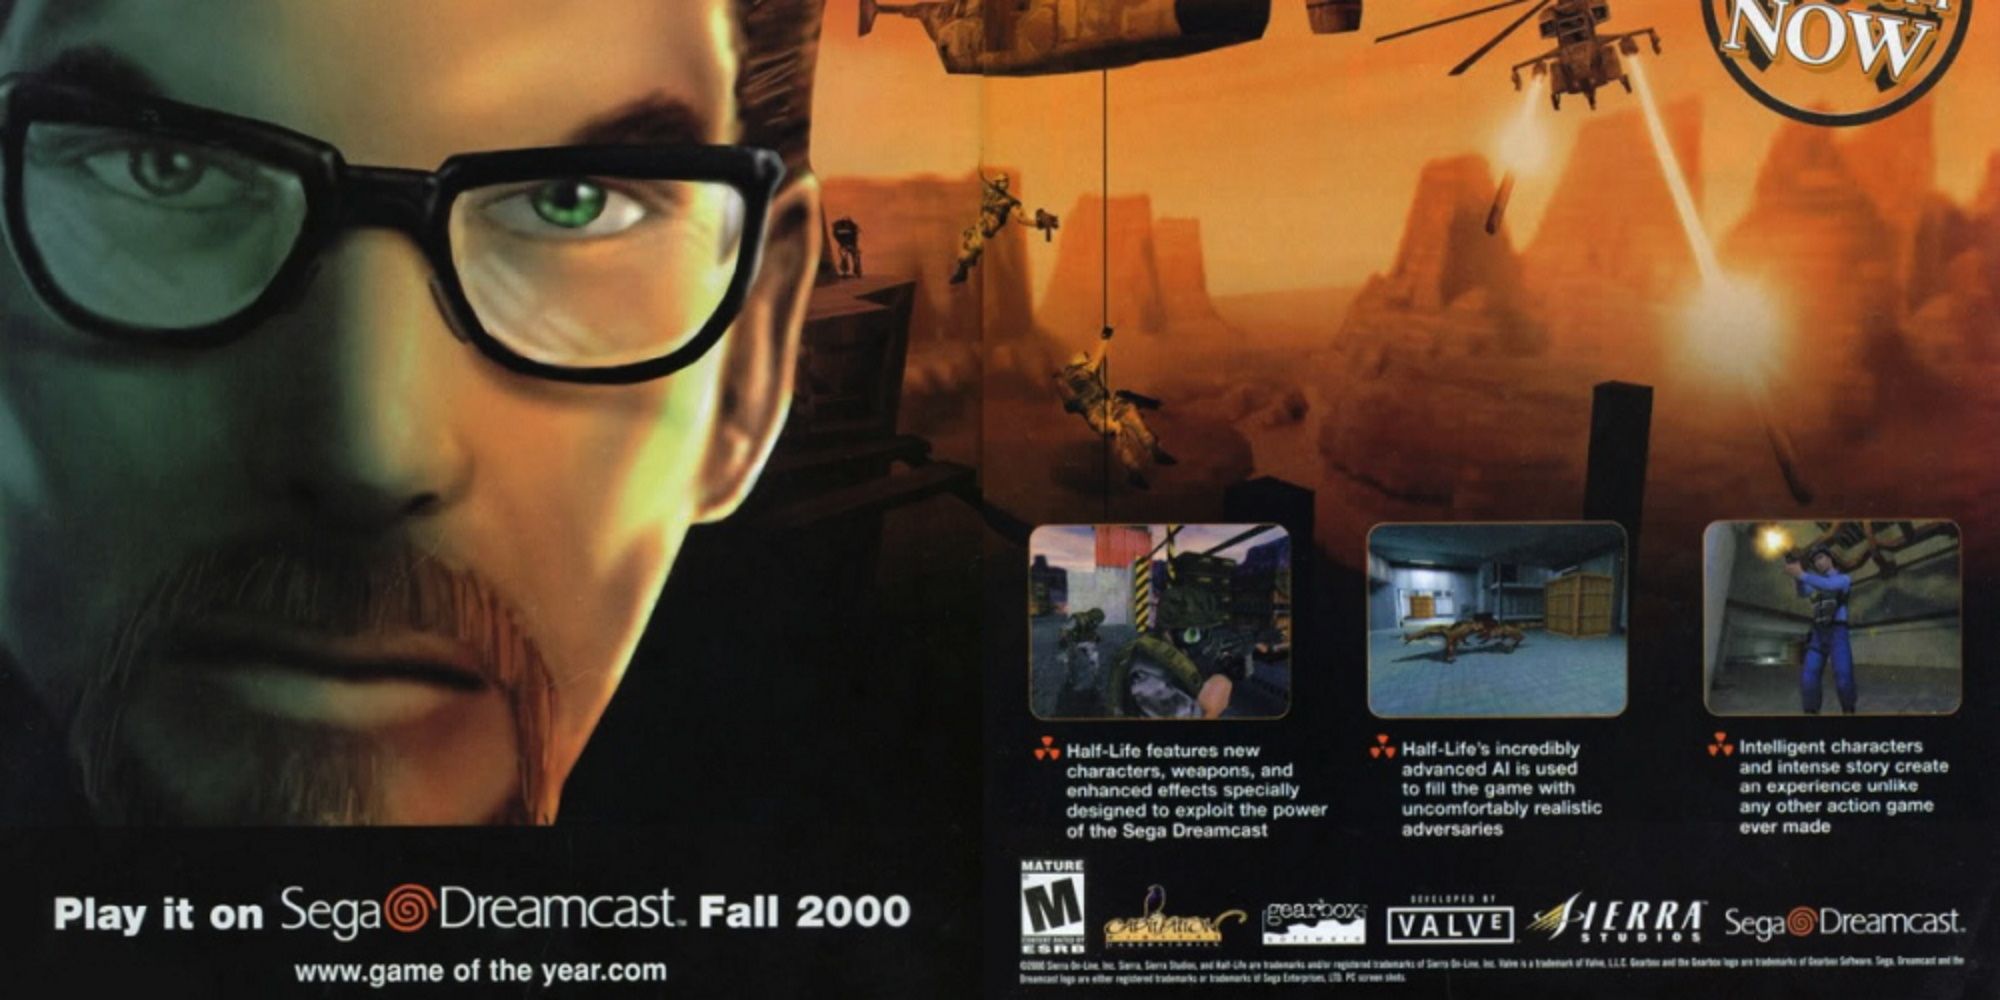 The original Half-Life Dreamcast magazine spread (cropped)